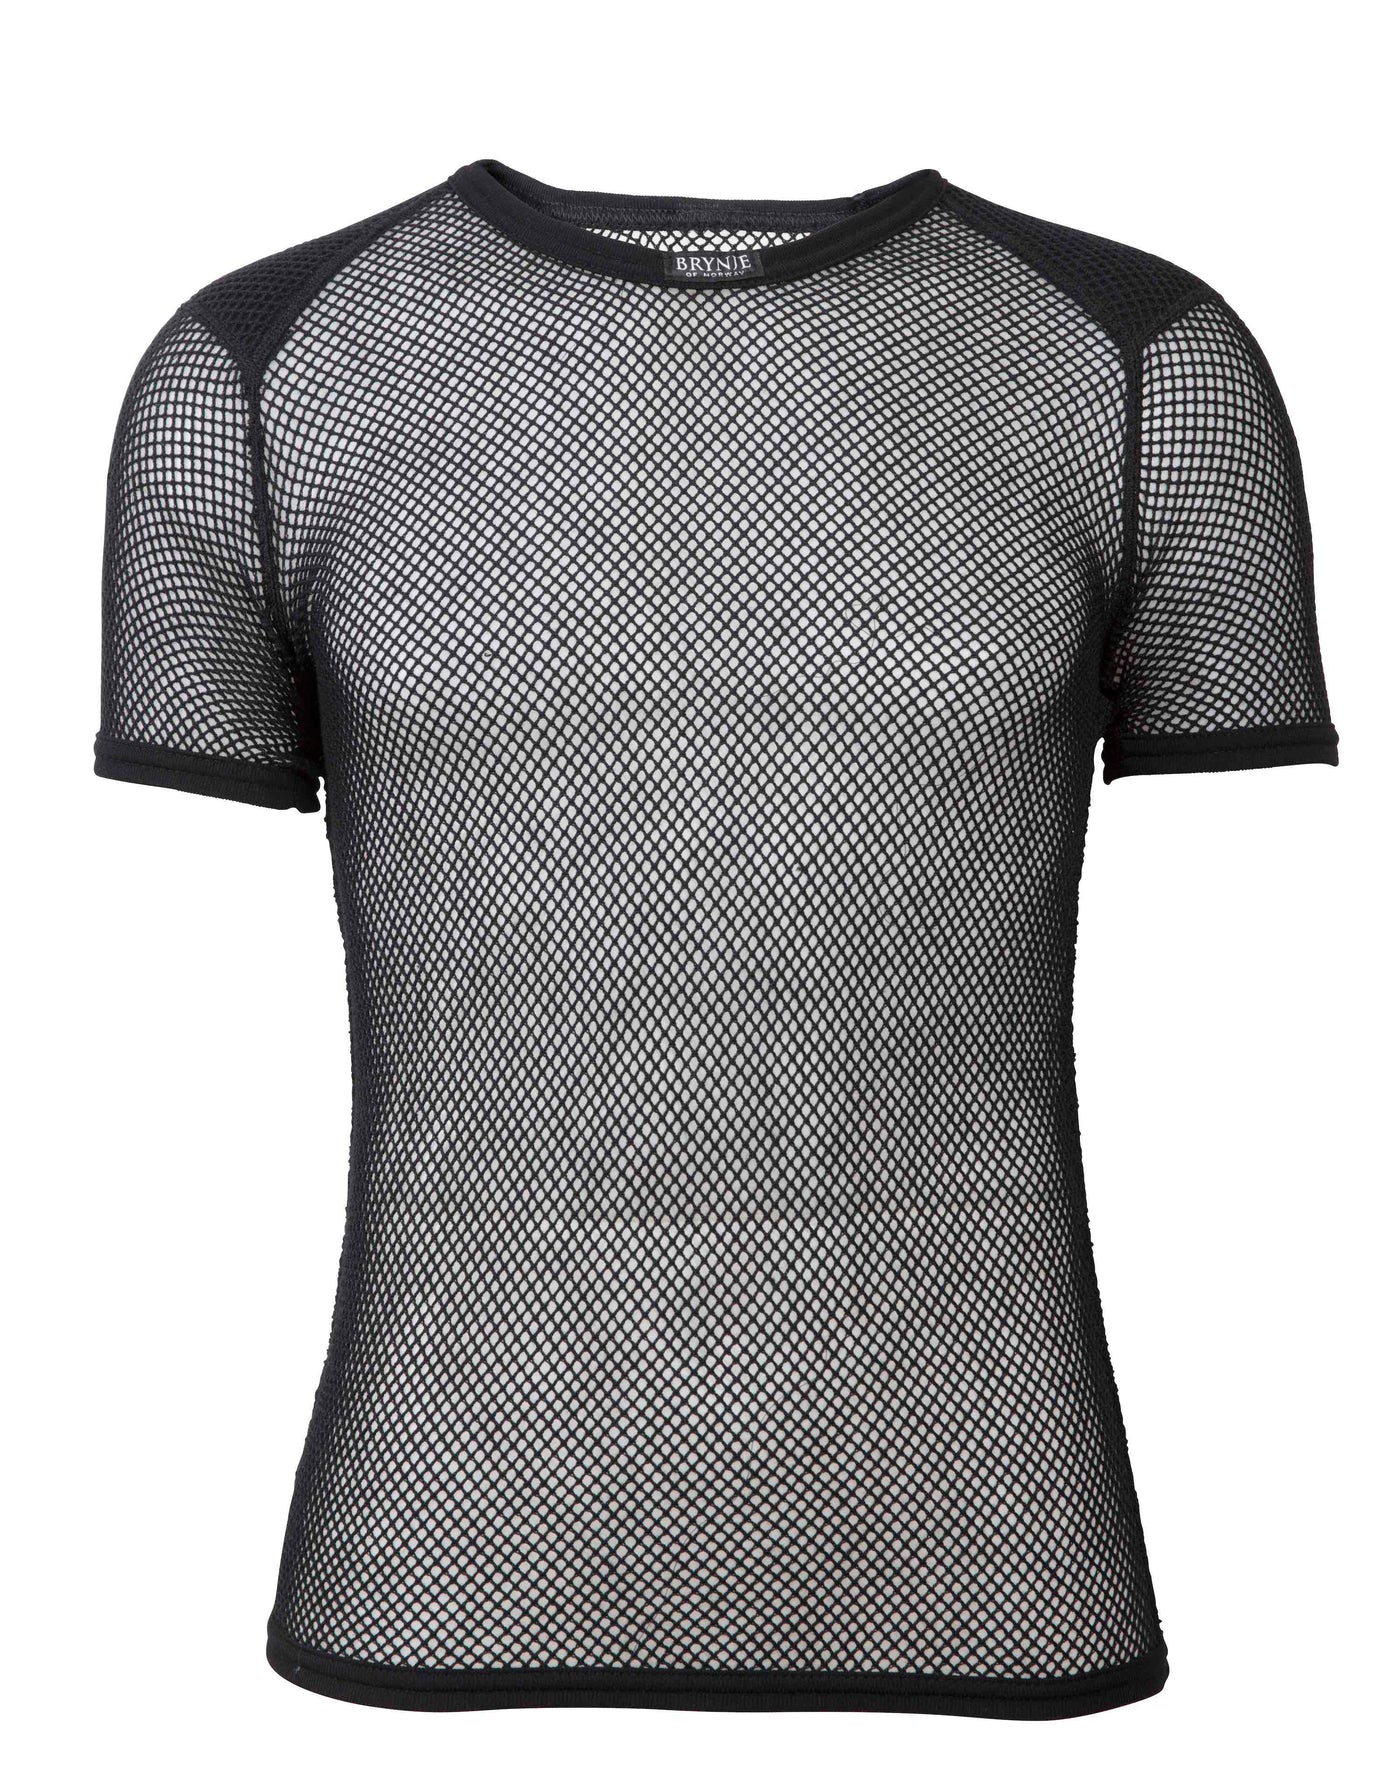 Brynje Wool Thermo T-shirt, merino base layer, fishnet, thermal t-shirt ...